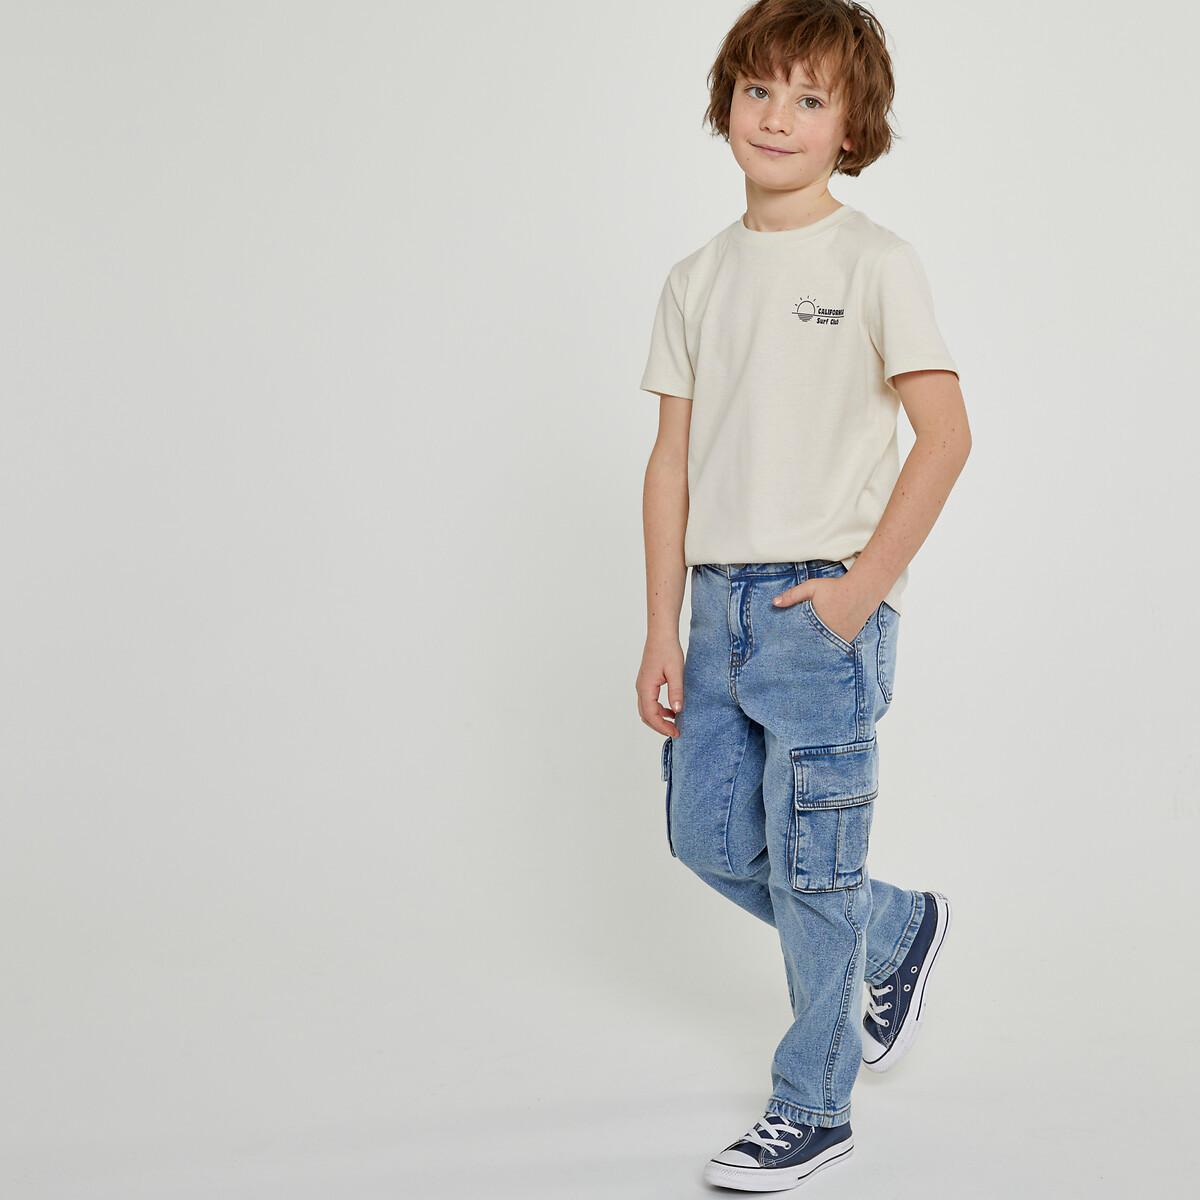 Worker-jeans Jungen Blau 128/134 von La Redoute Collections